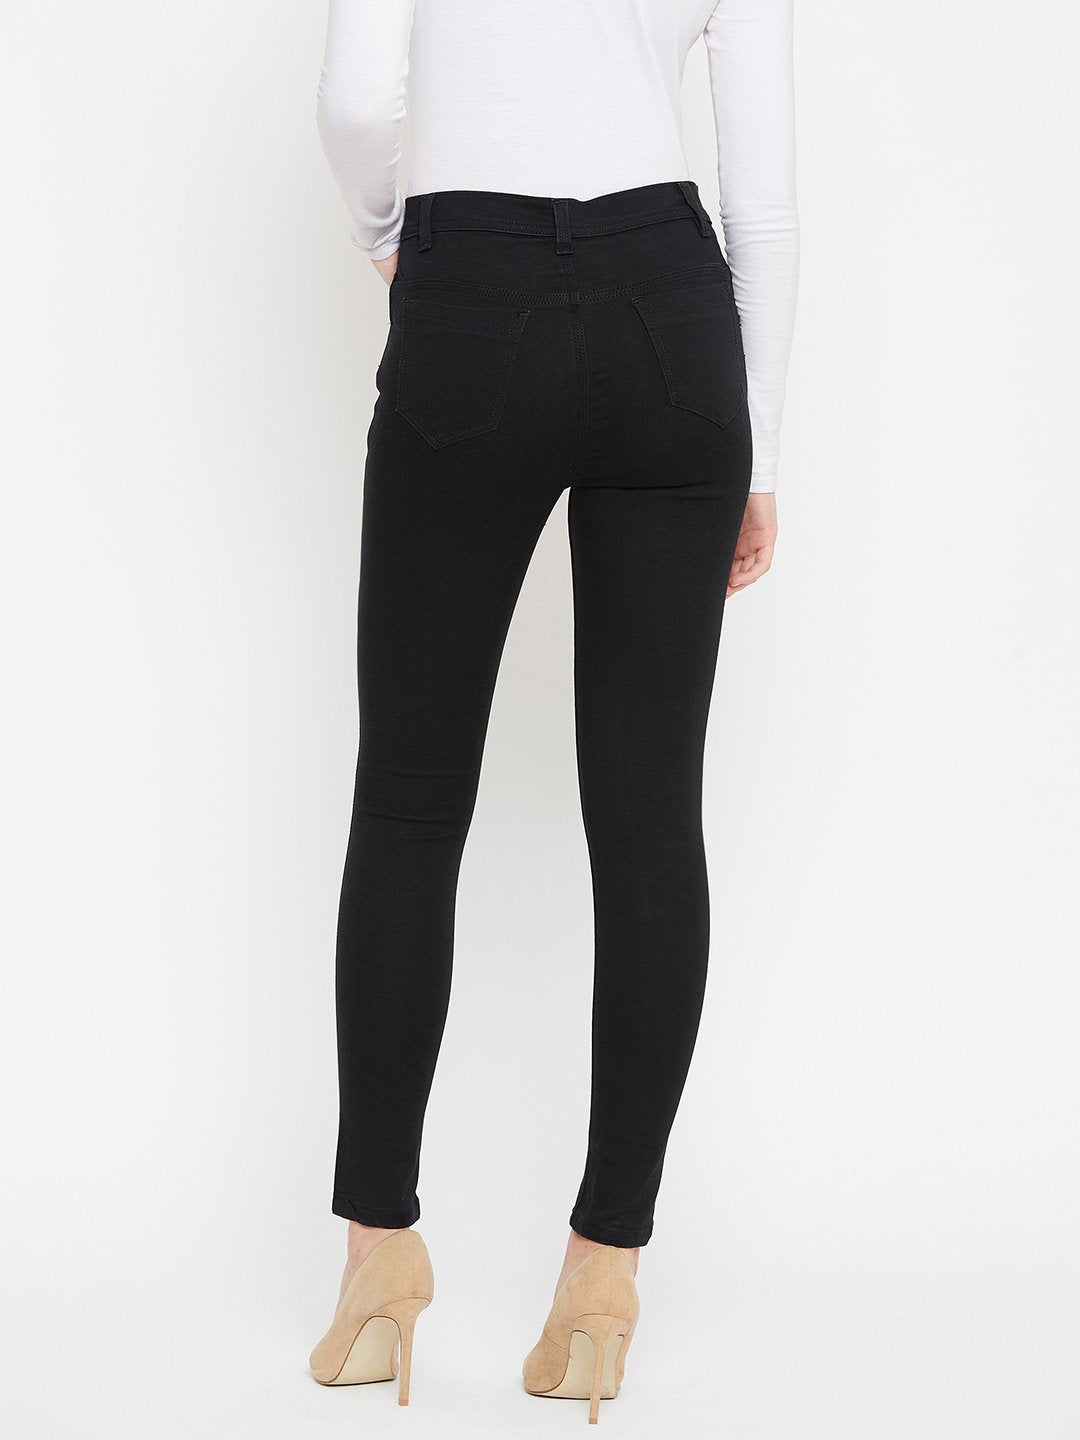 High Waist Stretchable Black Jeans - NiftyJeans